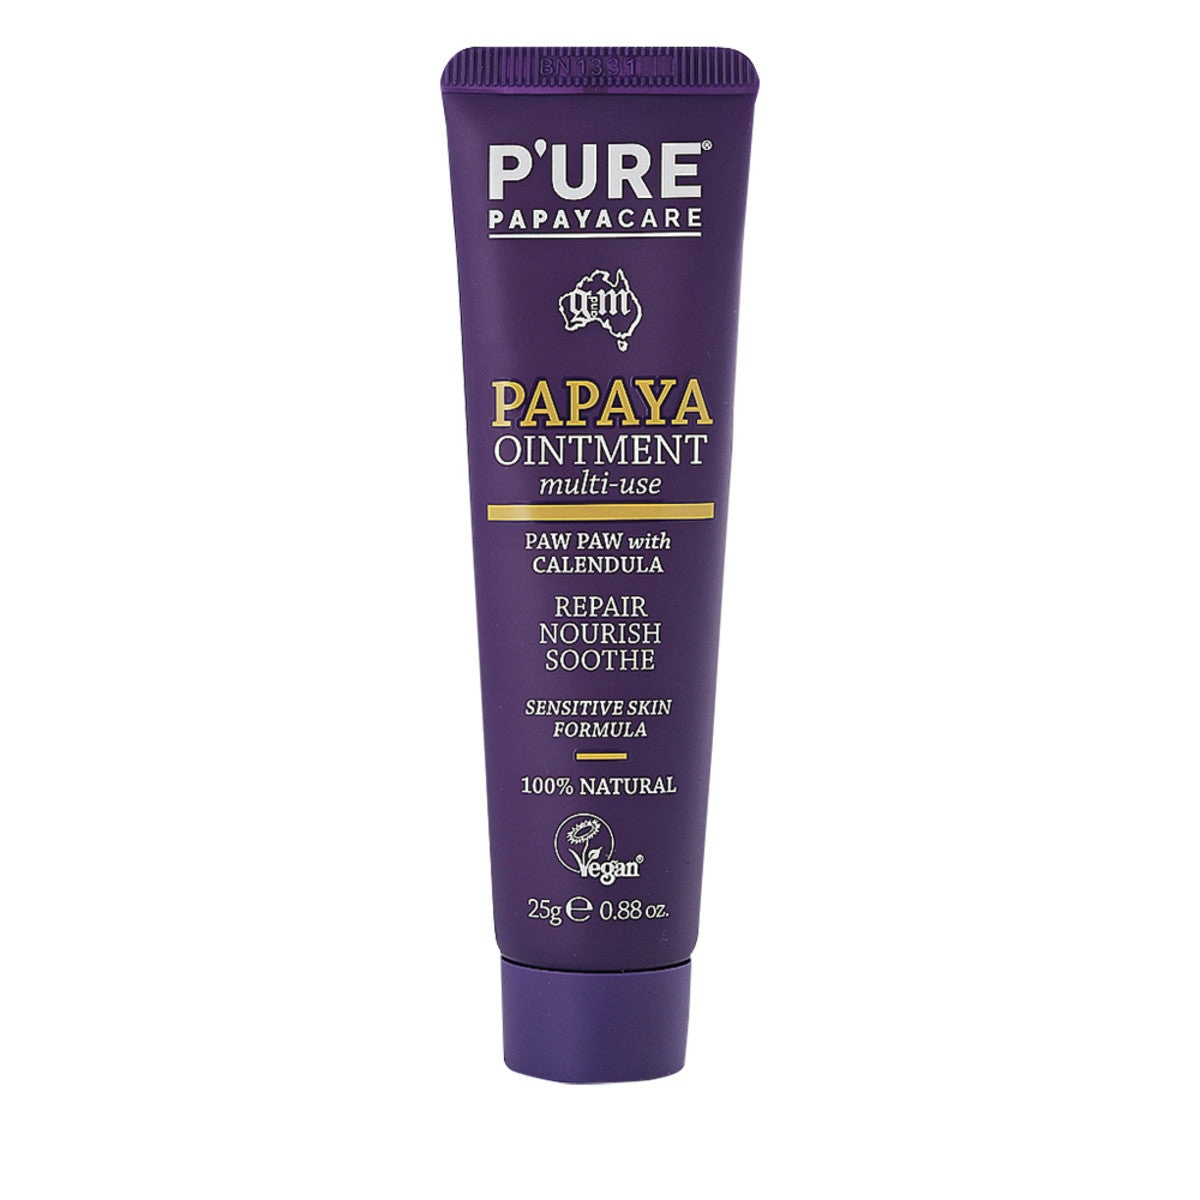 image of P'URE Papayacare Papaya Ointment Multi-Use (Paw Paw with Calendula) 25g on white background